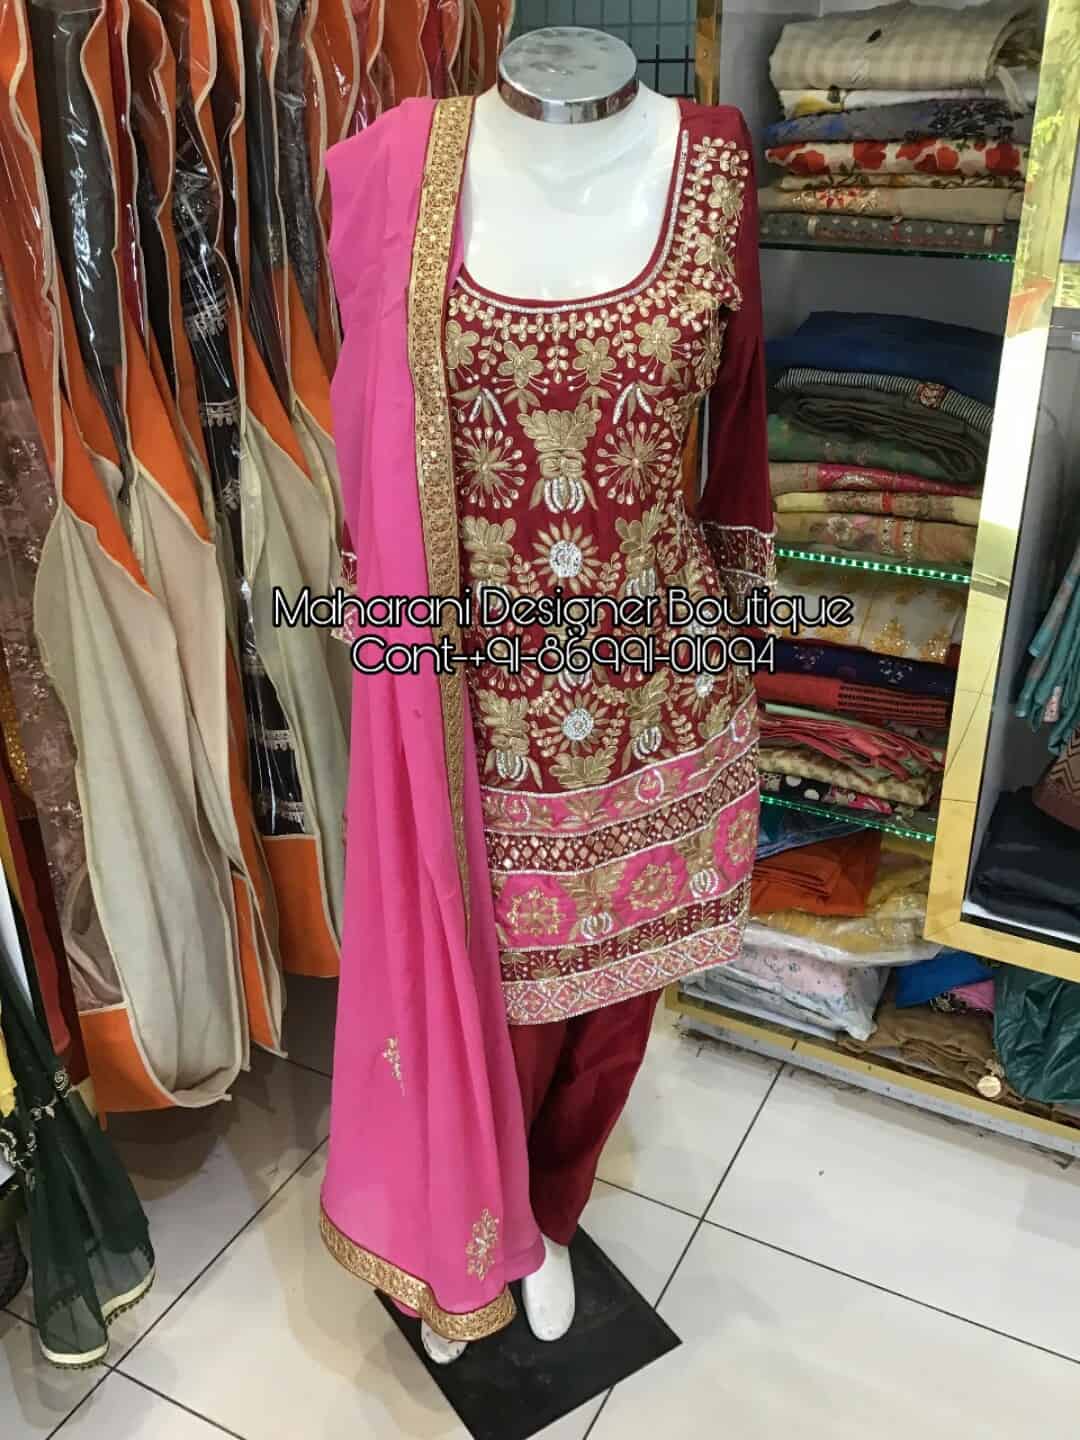 Jaipuri Print Cotton Suit Designs | Cotton Printed Jaipuri Suit Designs |  Cotton Jaipuri Suit Design - YouTube